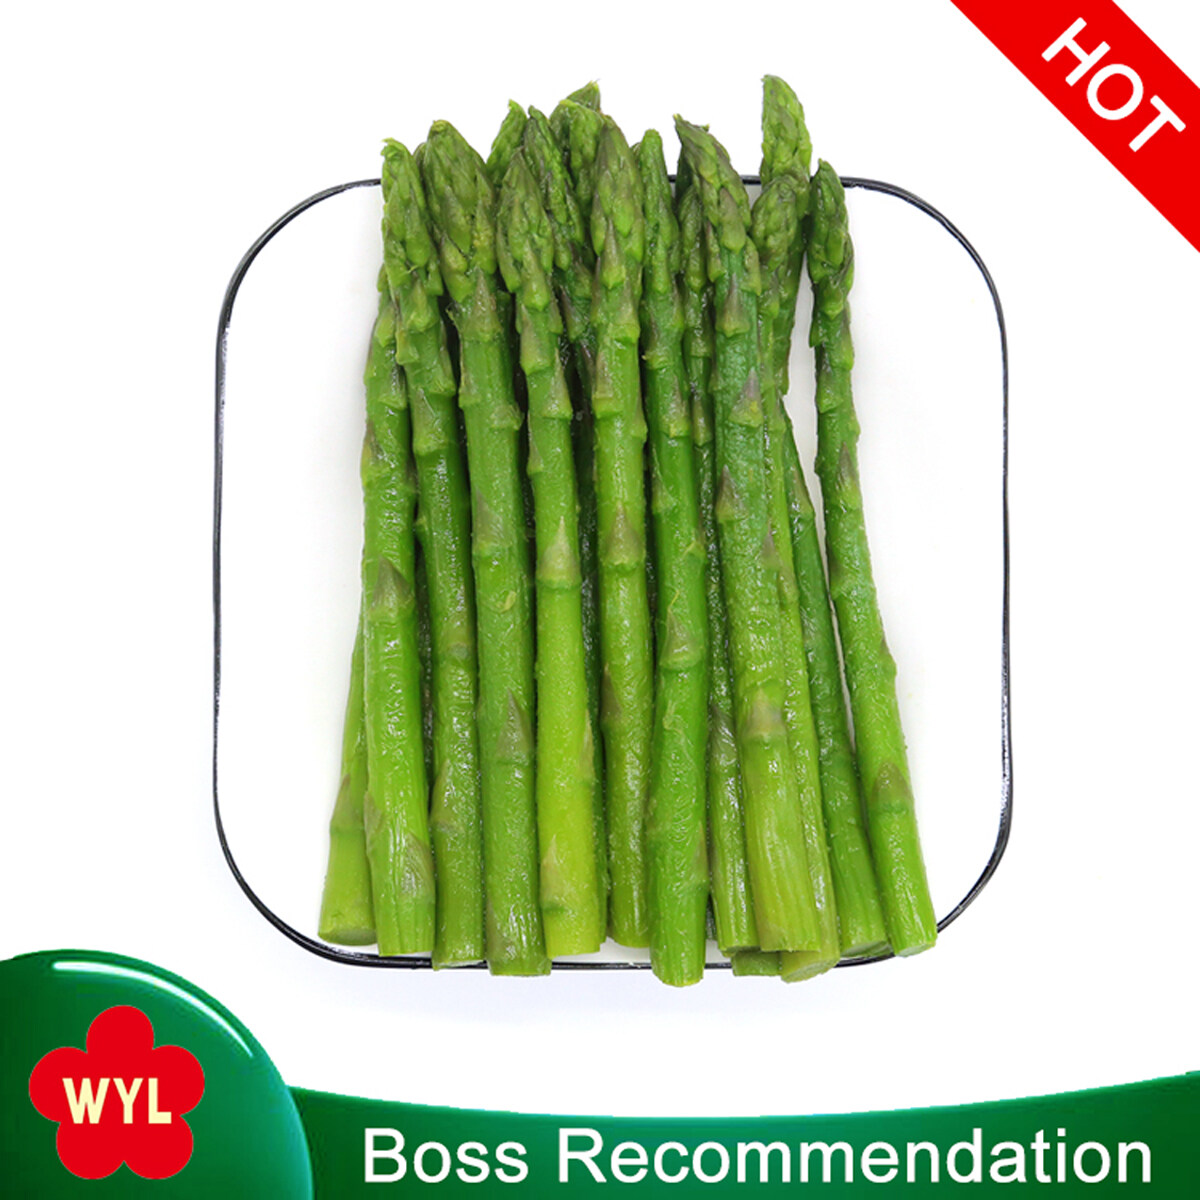 Hot sales new crop frozen vegetables IQF frozen green asparagus spears origin China